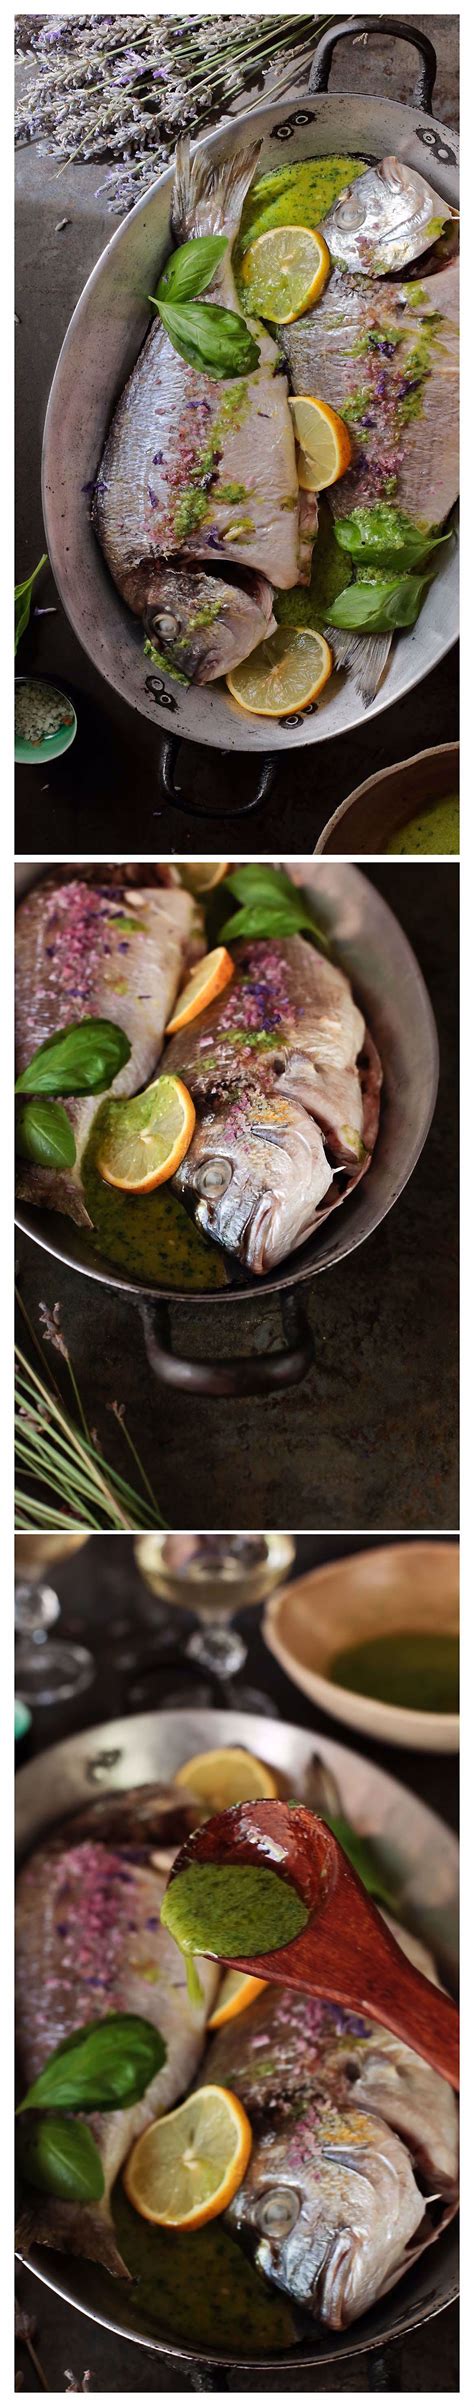 dorado fish recipes;parmesan fish recipes;ono fish recipes;tapila fish recipes;walleye fish ...